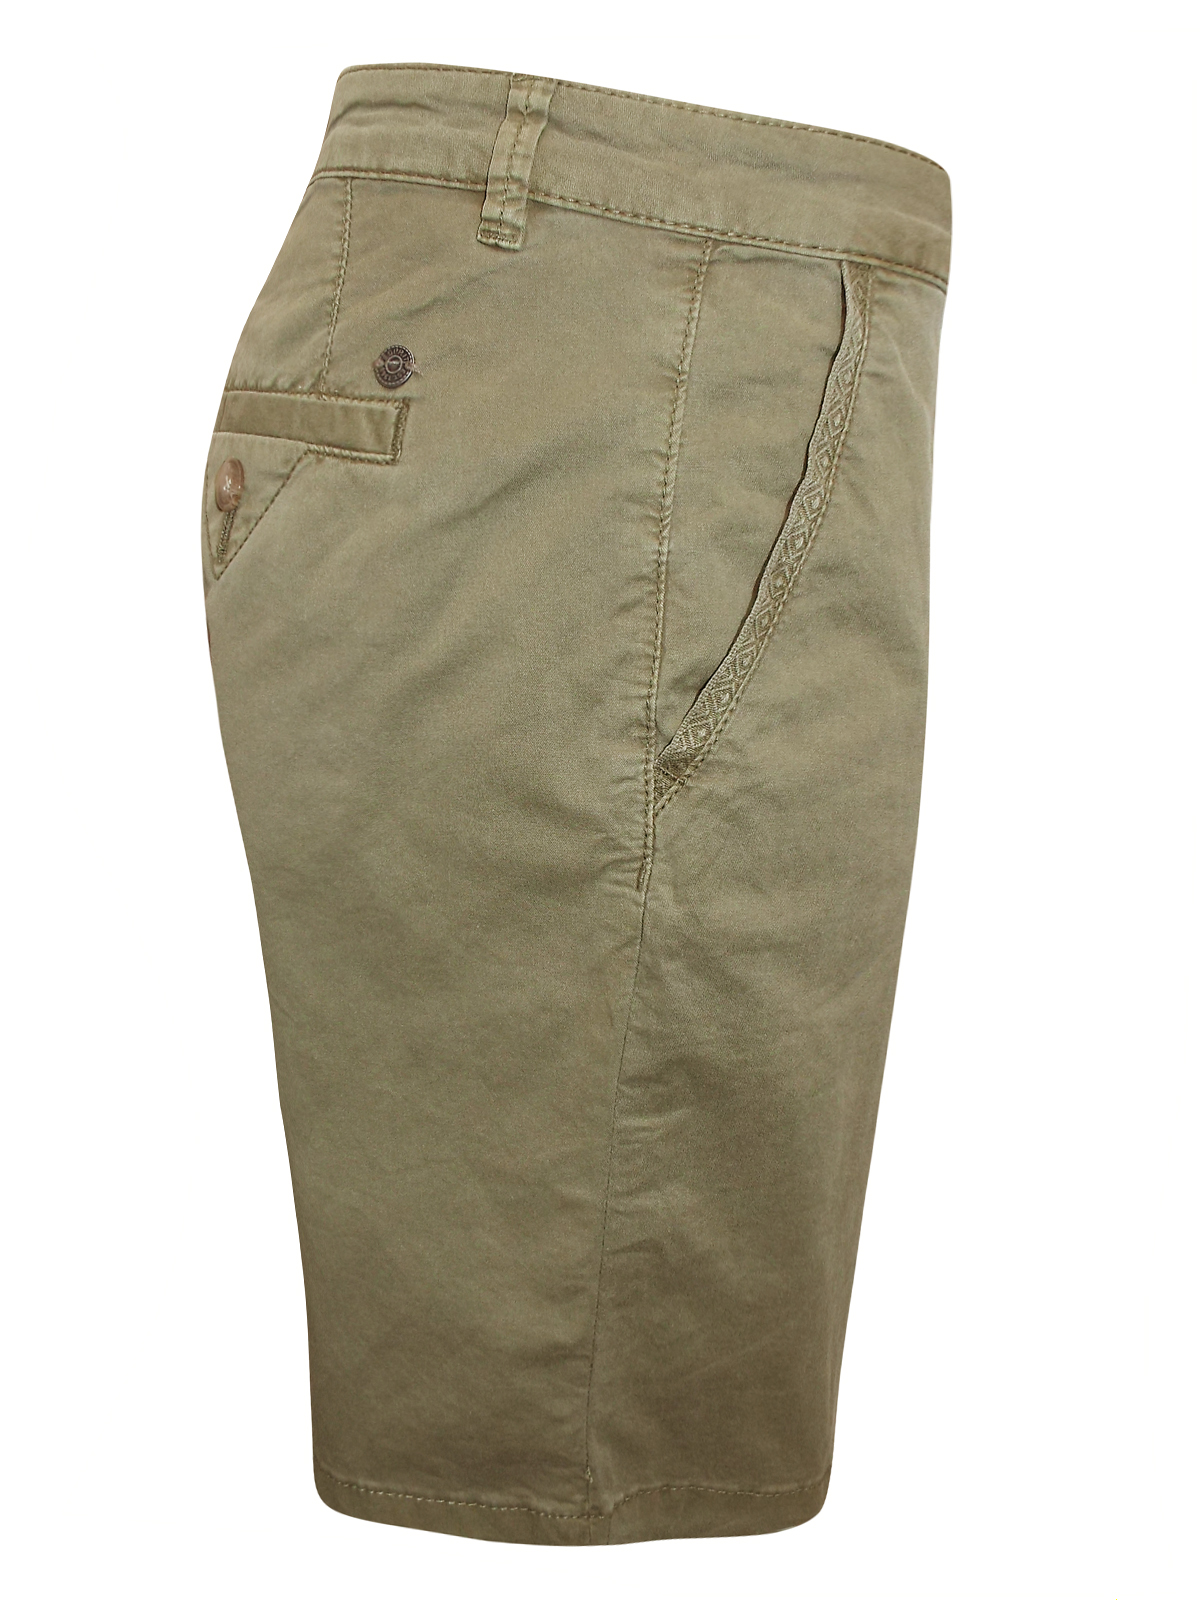 Esprit - - 3Sprit KHAKI Cotton Rich Long Chino Shorts - Size 6 to 18